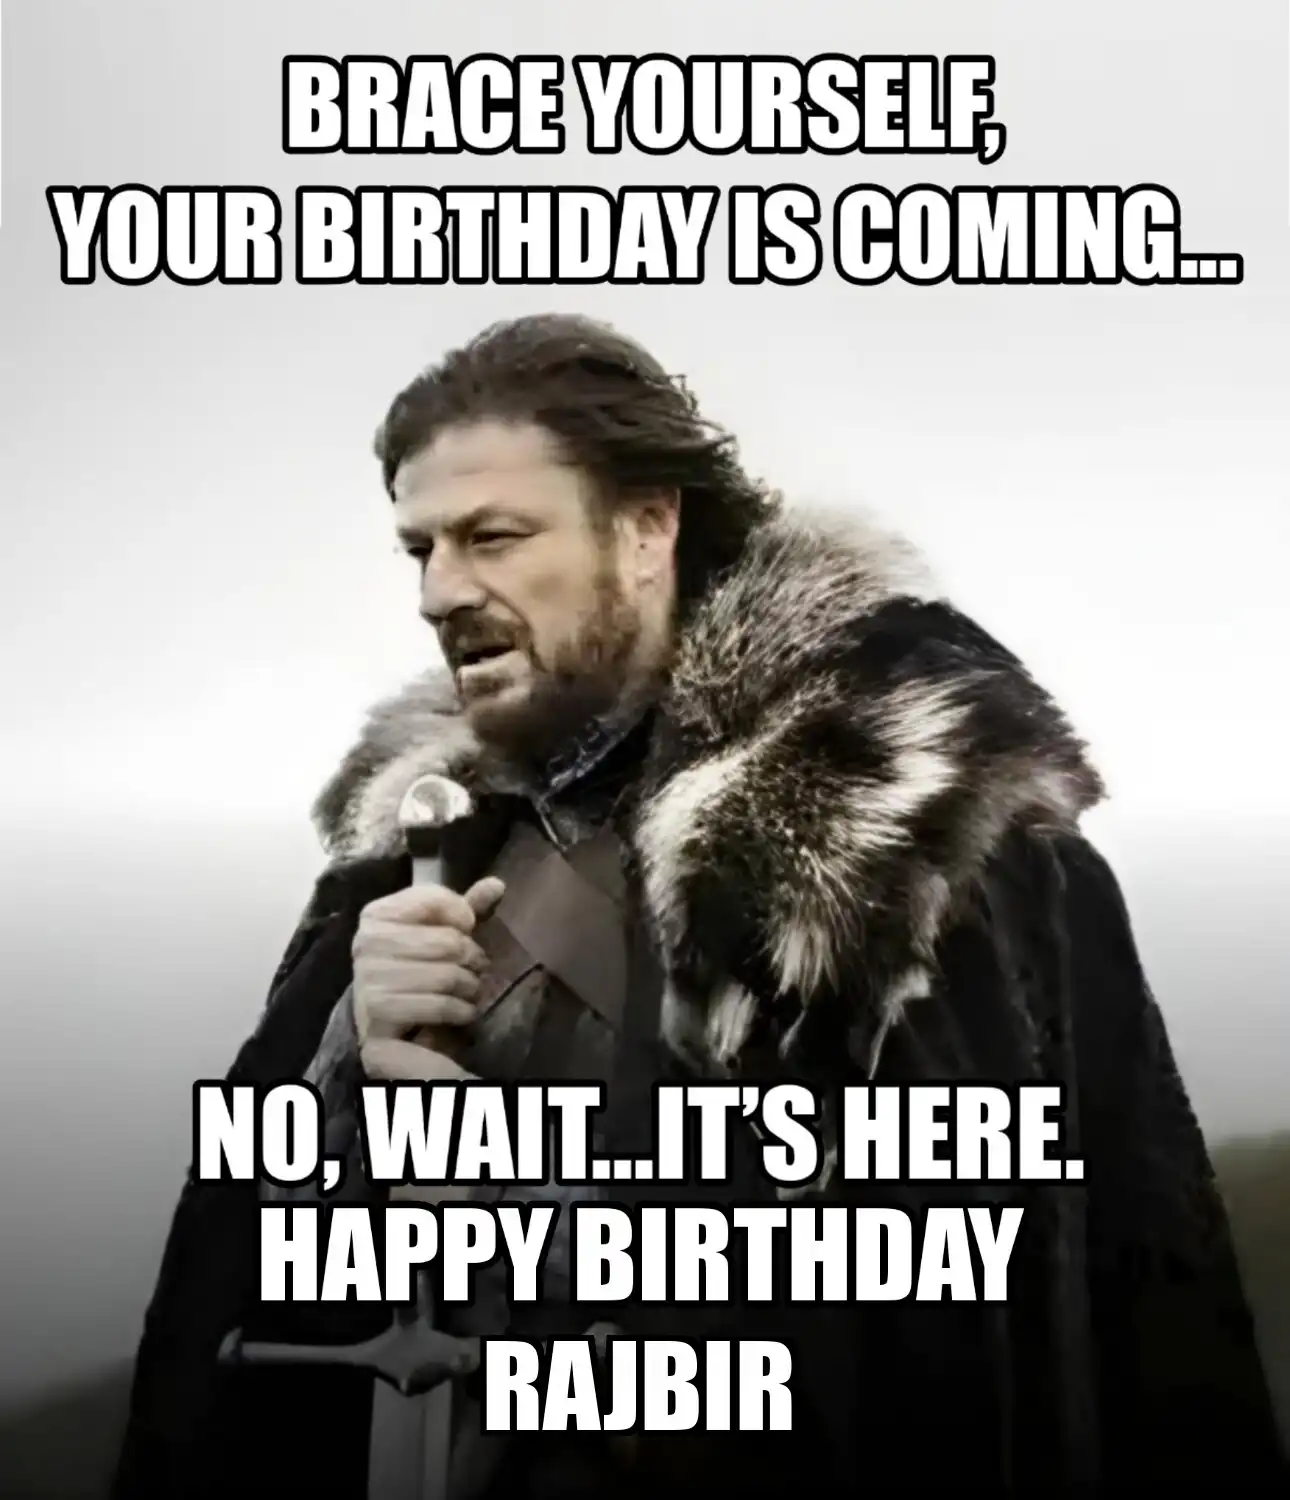 Happy Birthday Rajbir Brace Yourself Your Birthday Is Coming Meme